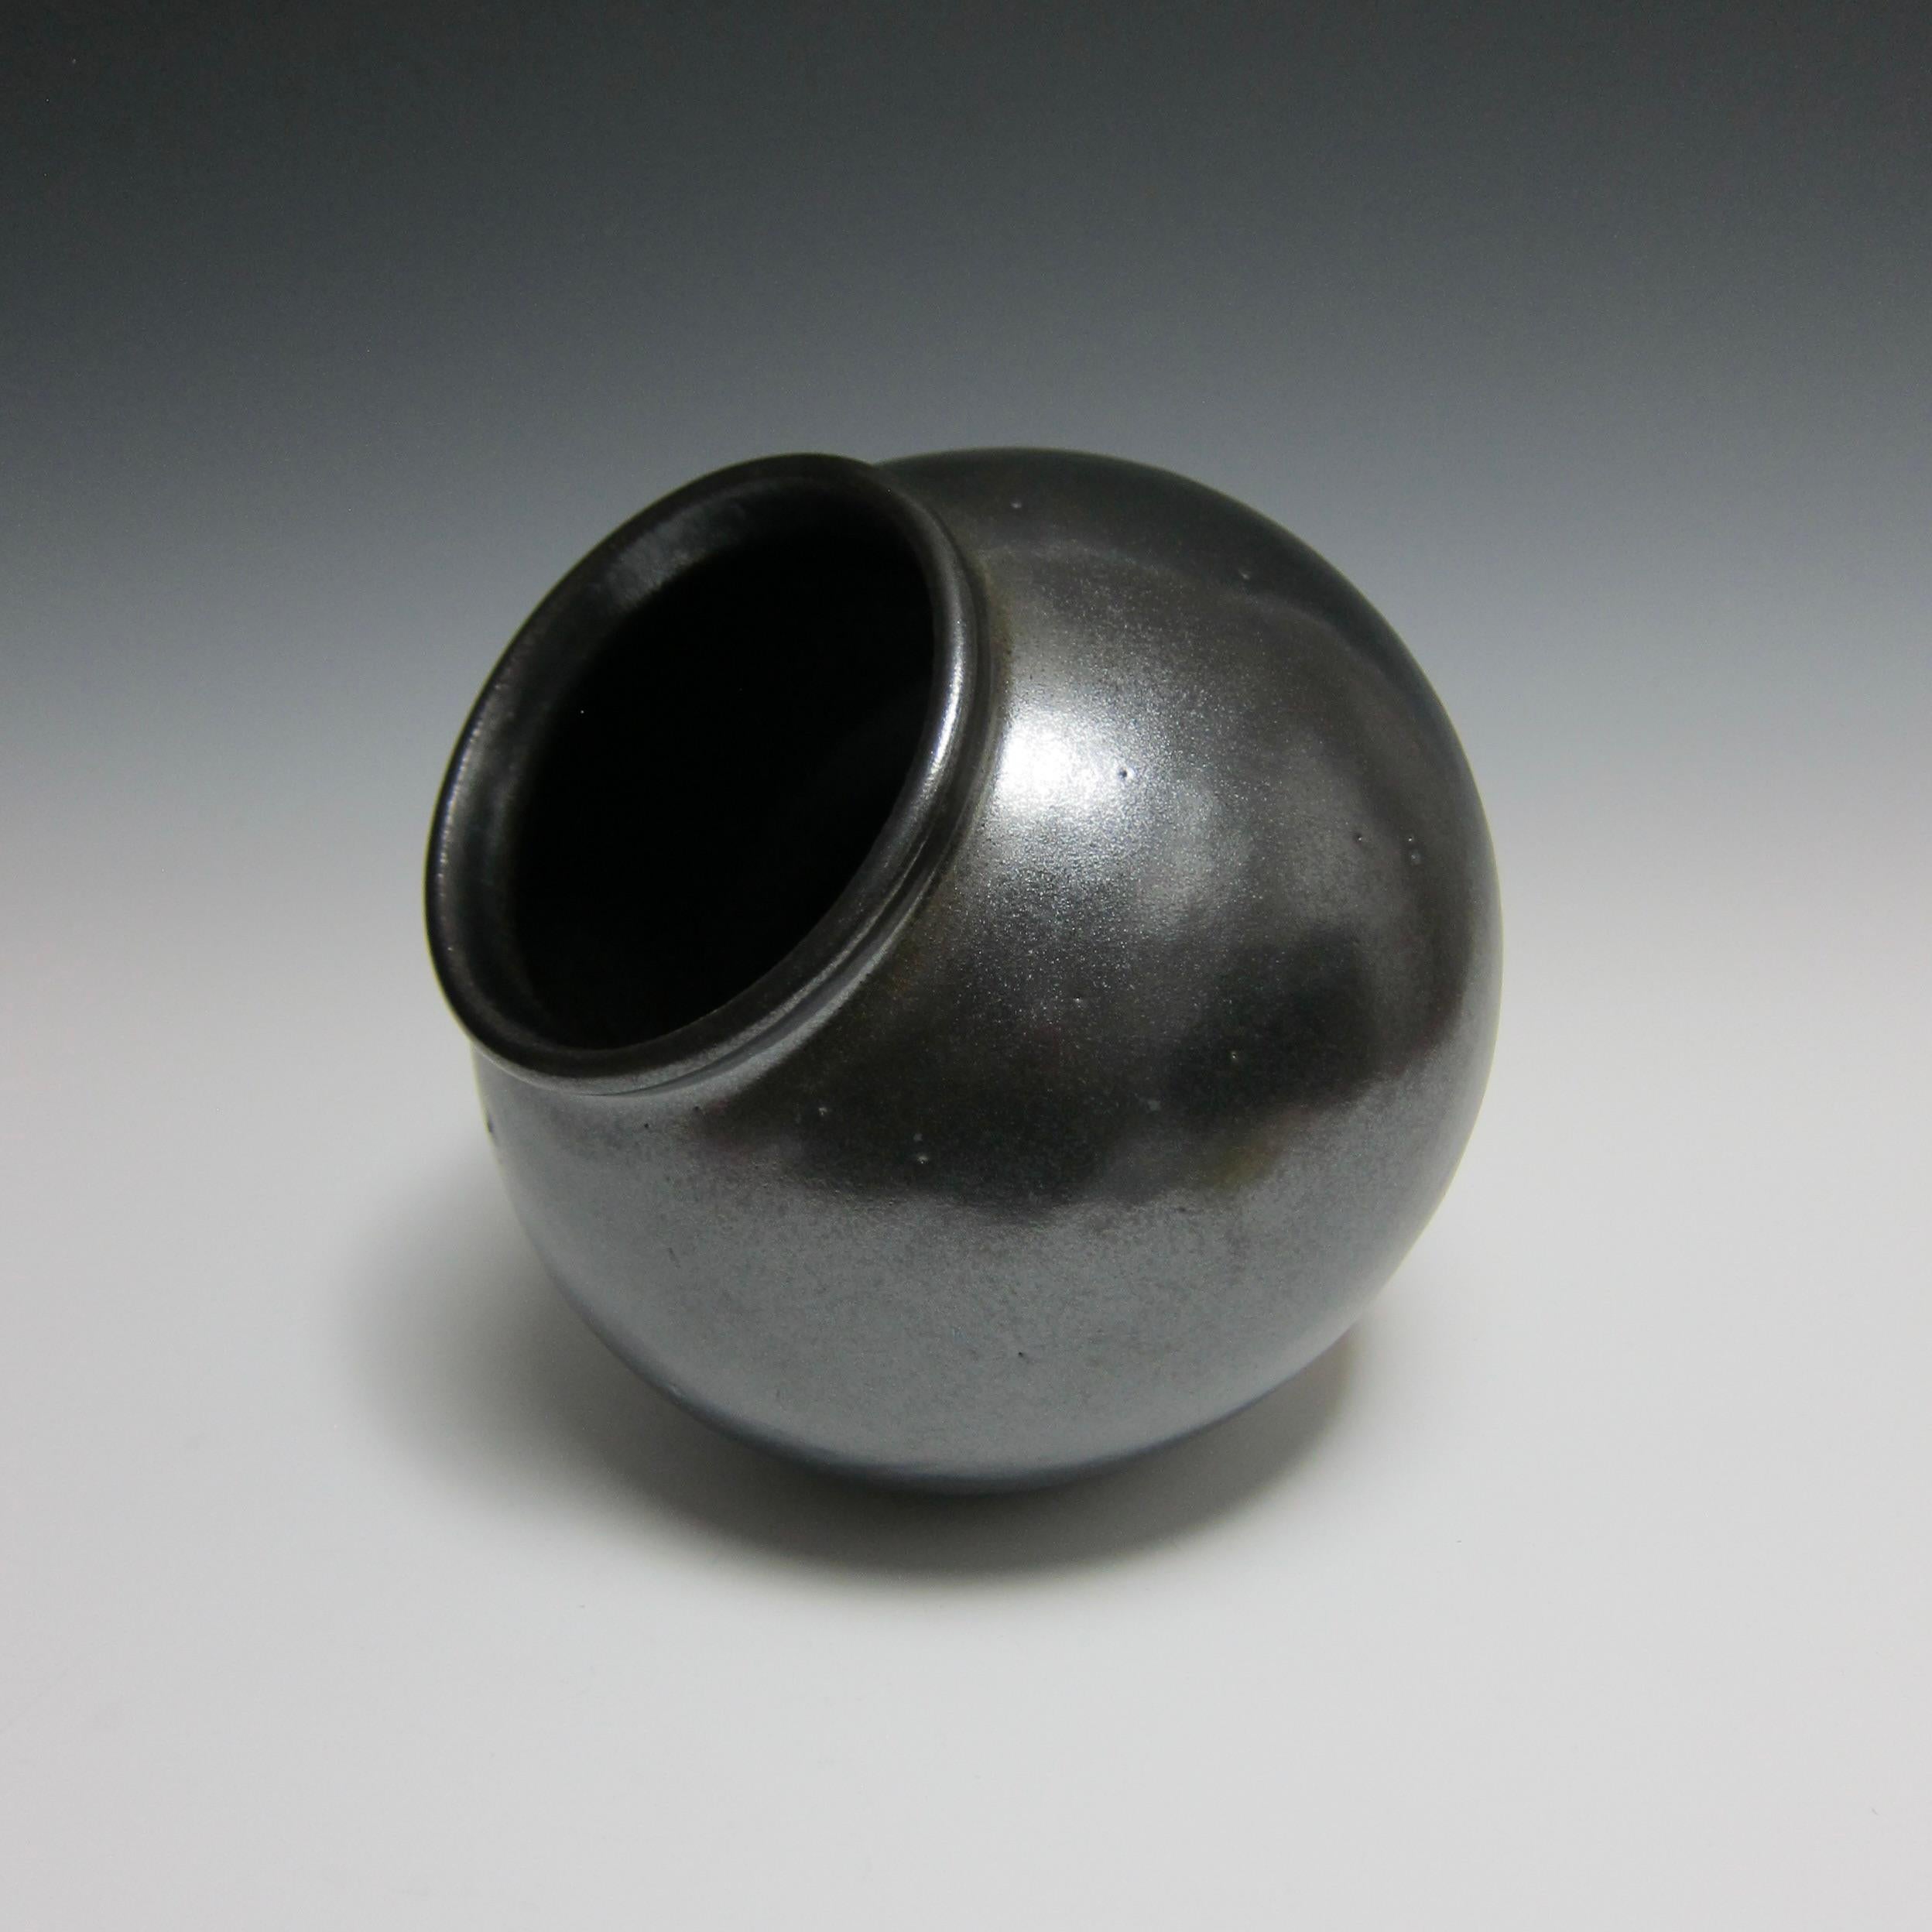 Modern Wheel Thrown Moon Jar by Jason Fox For Sale